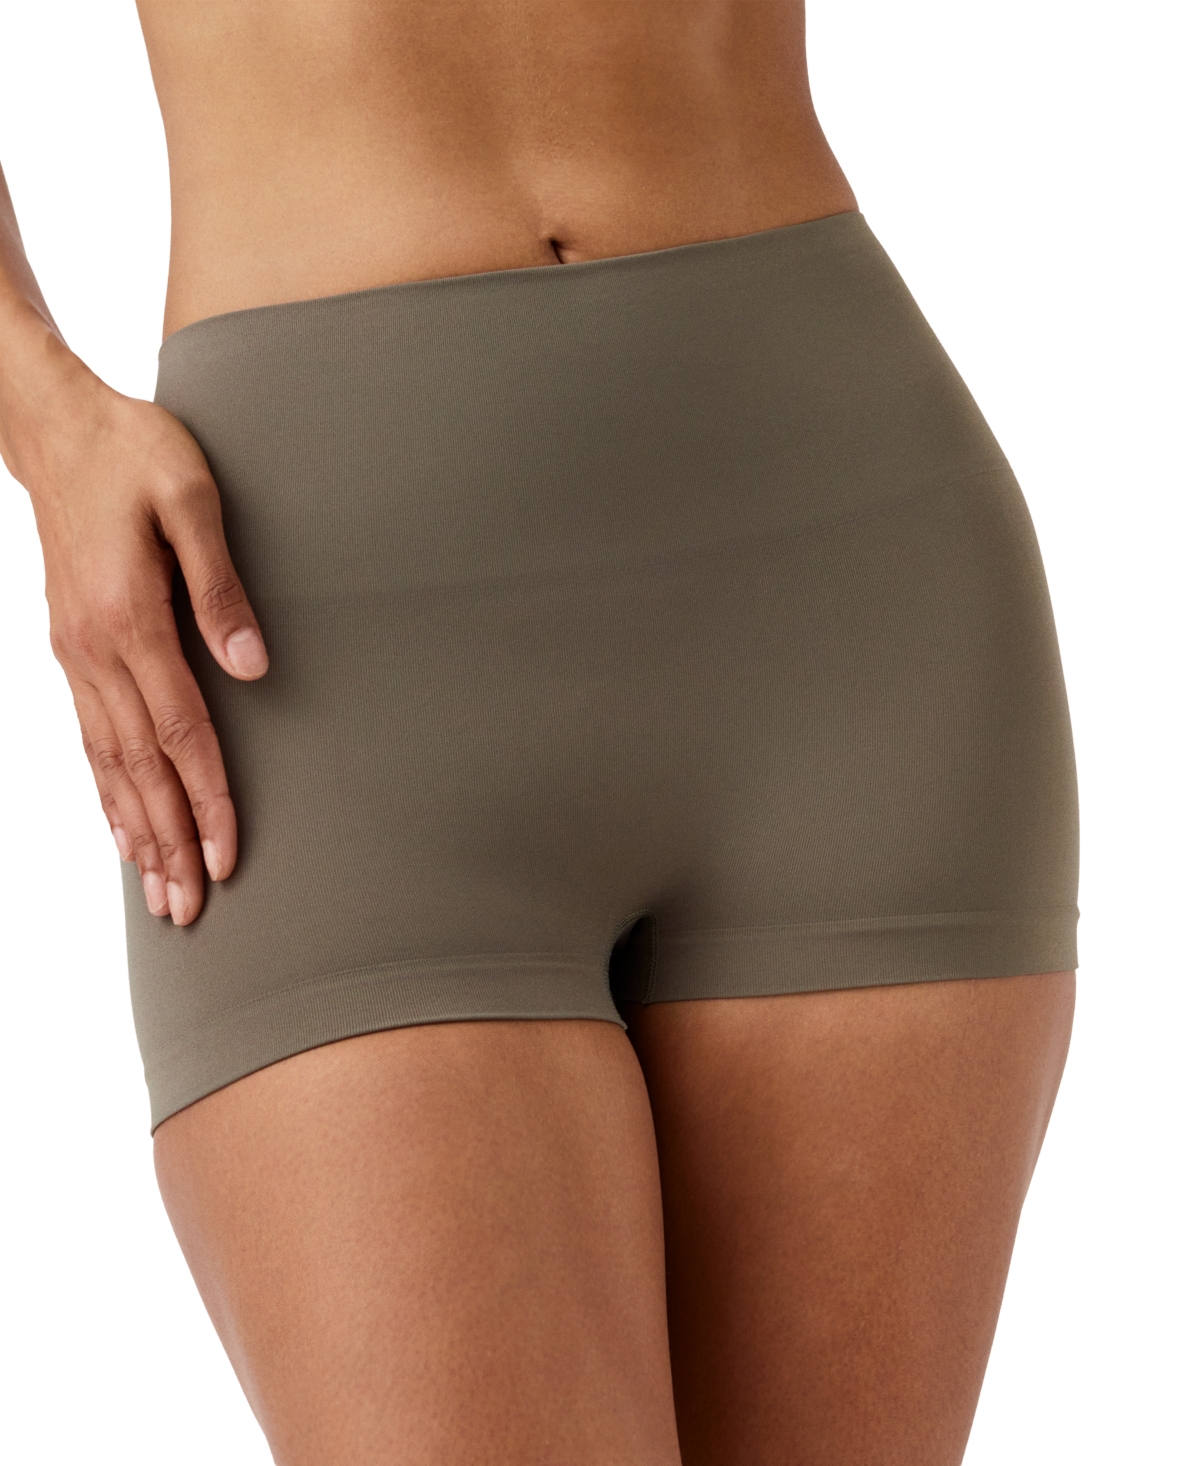 Spanx Skinny Britches Shorts Beige, $28, NET-A-PORTER.COM